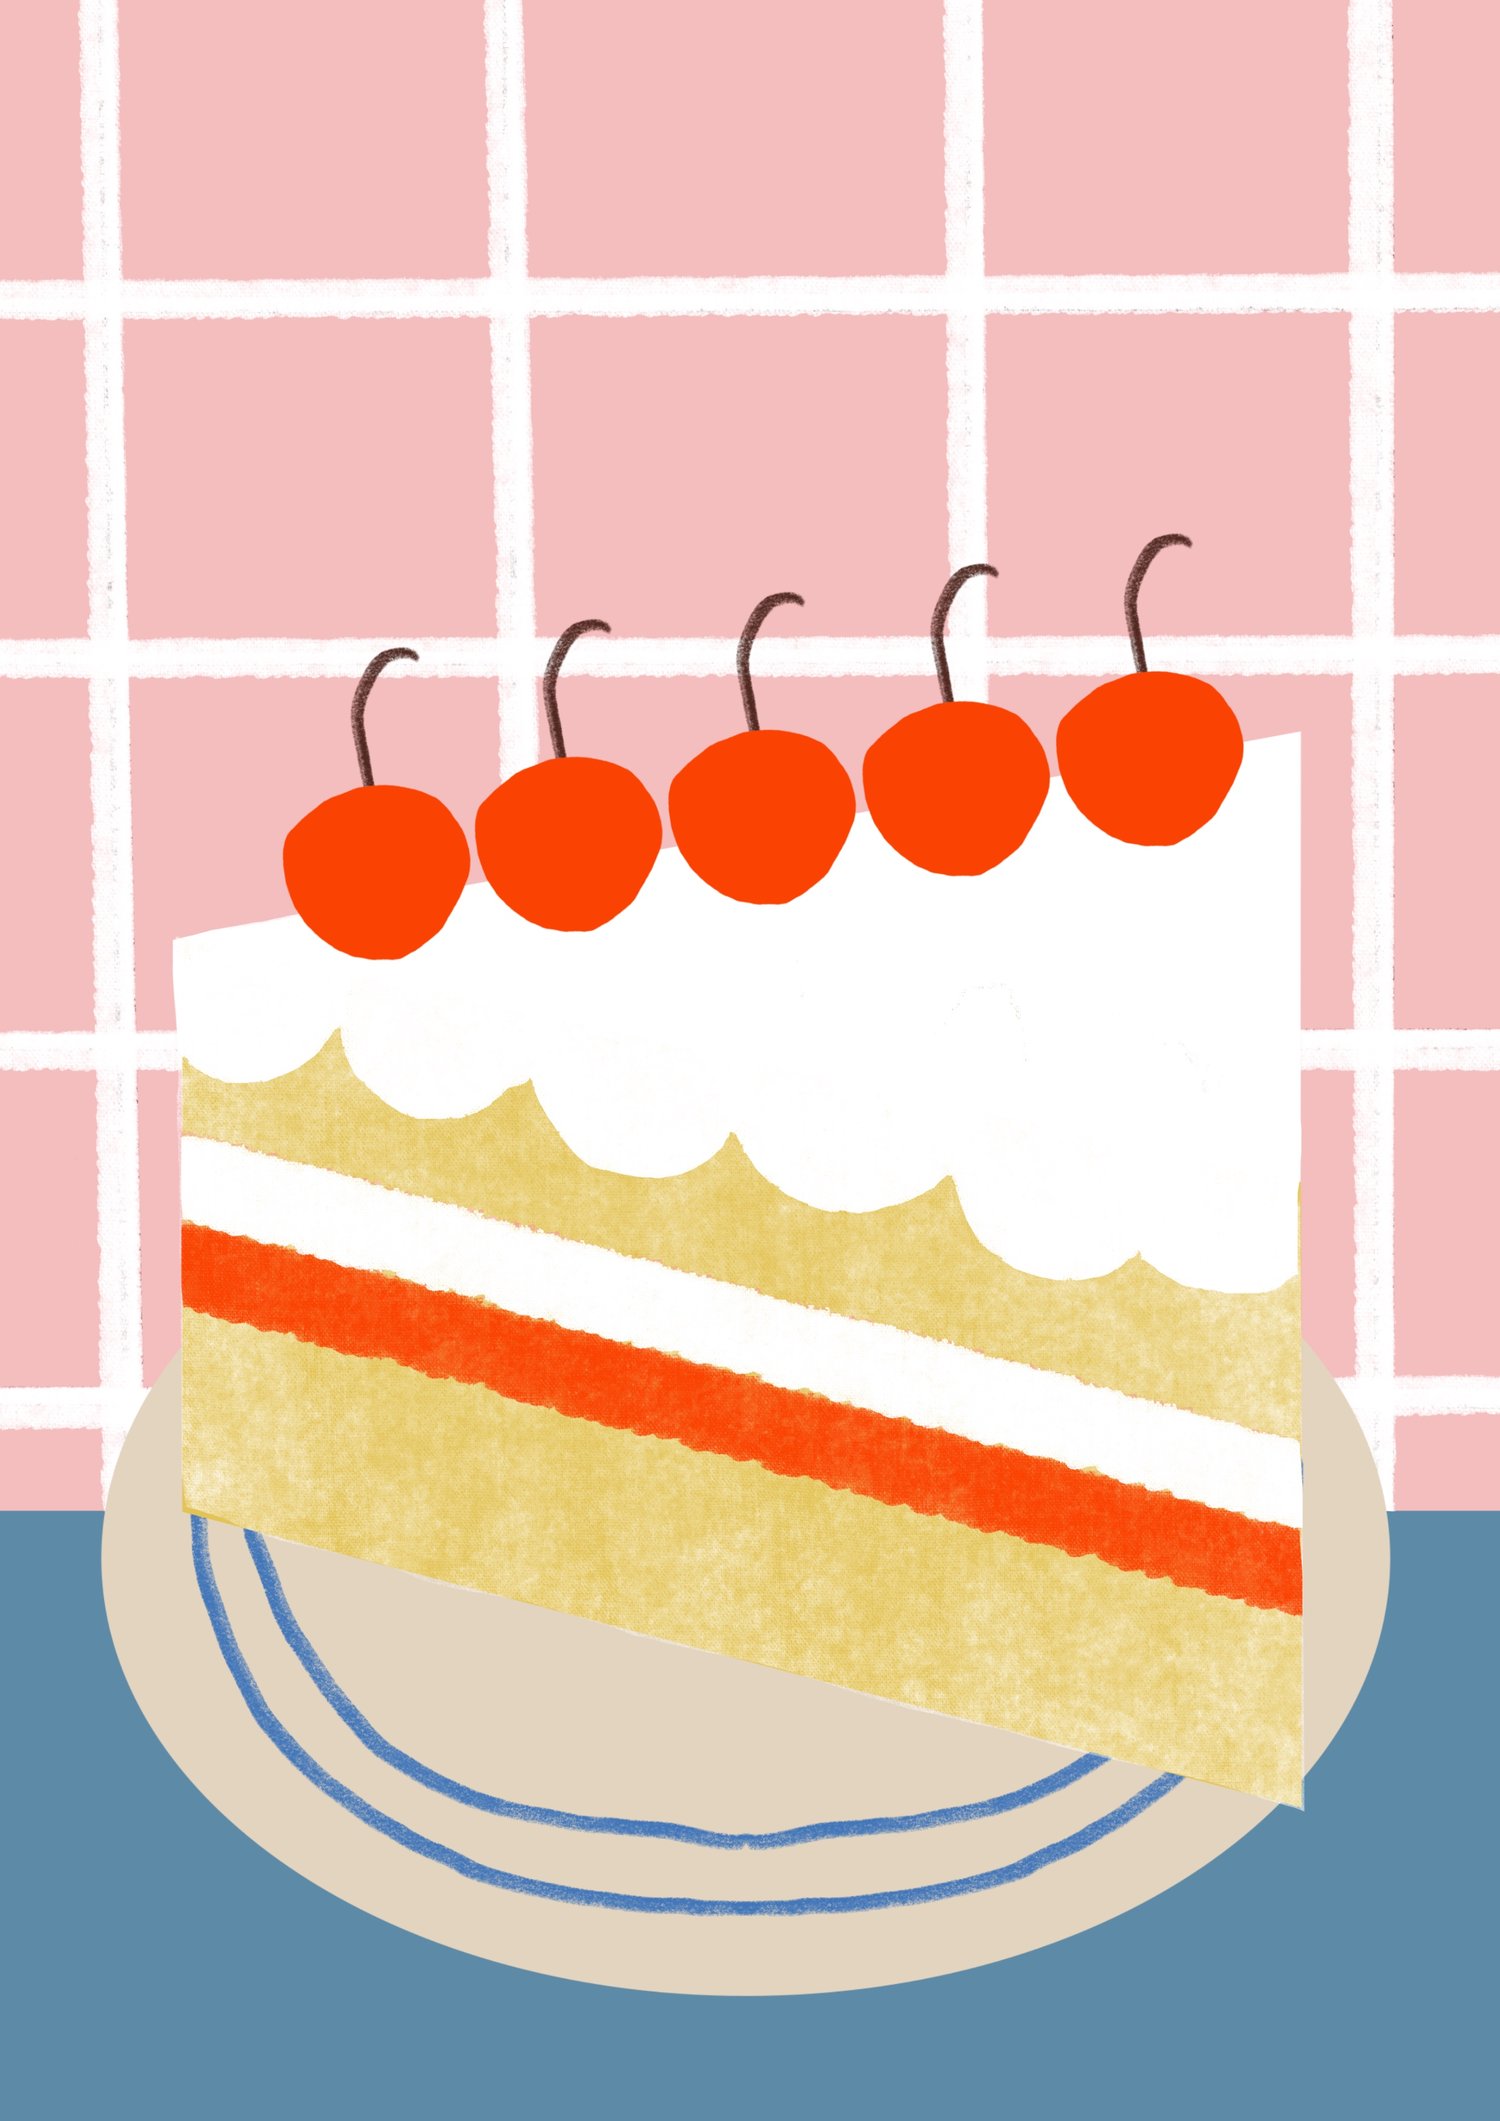 Cake Card